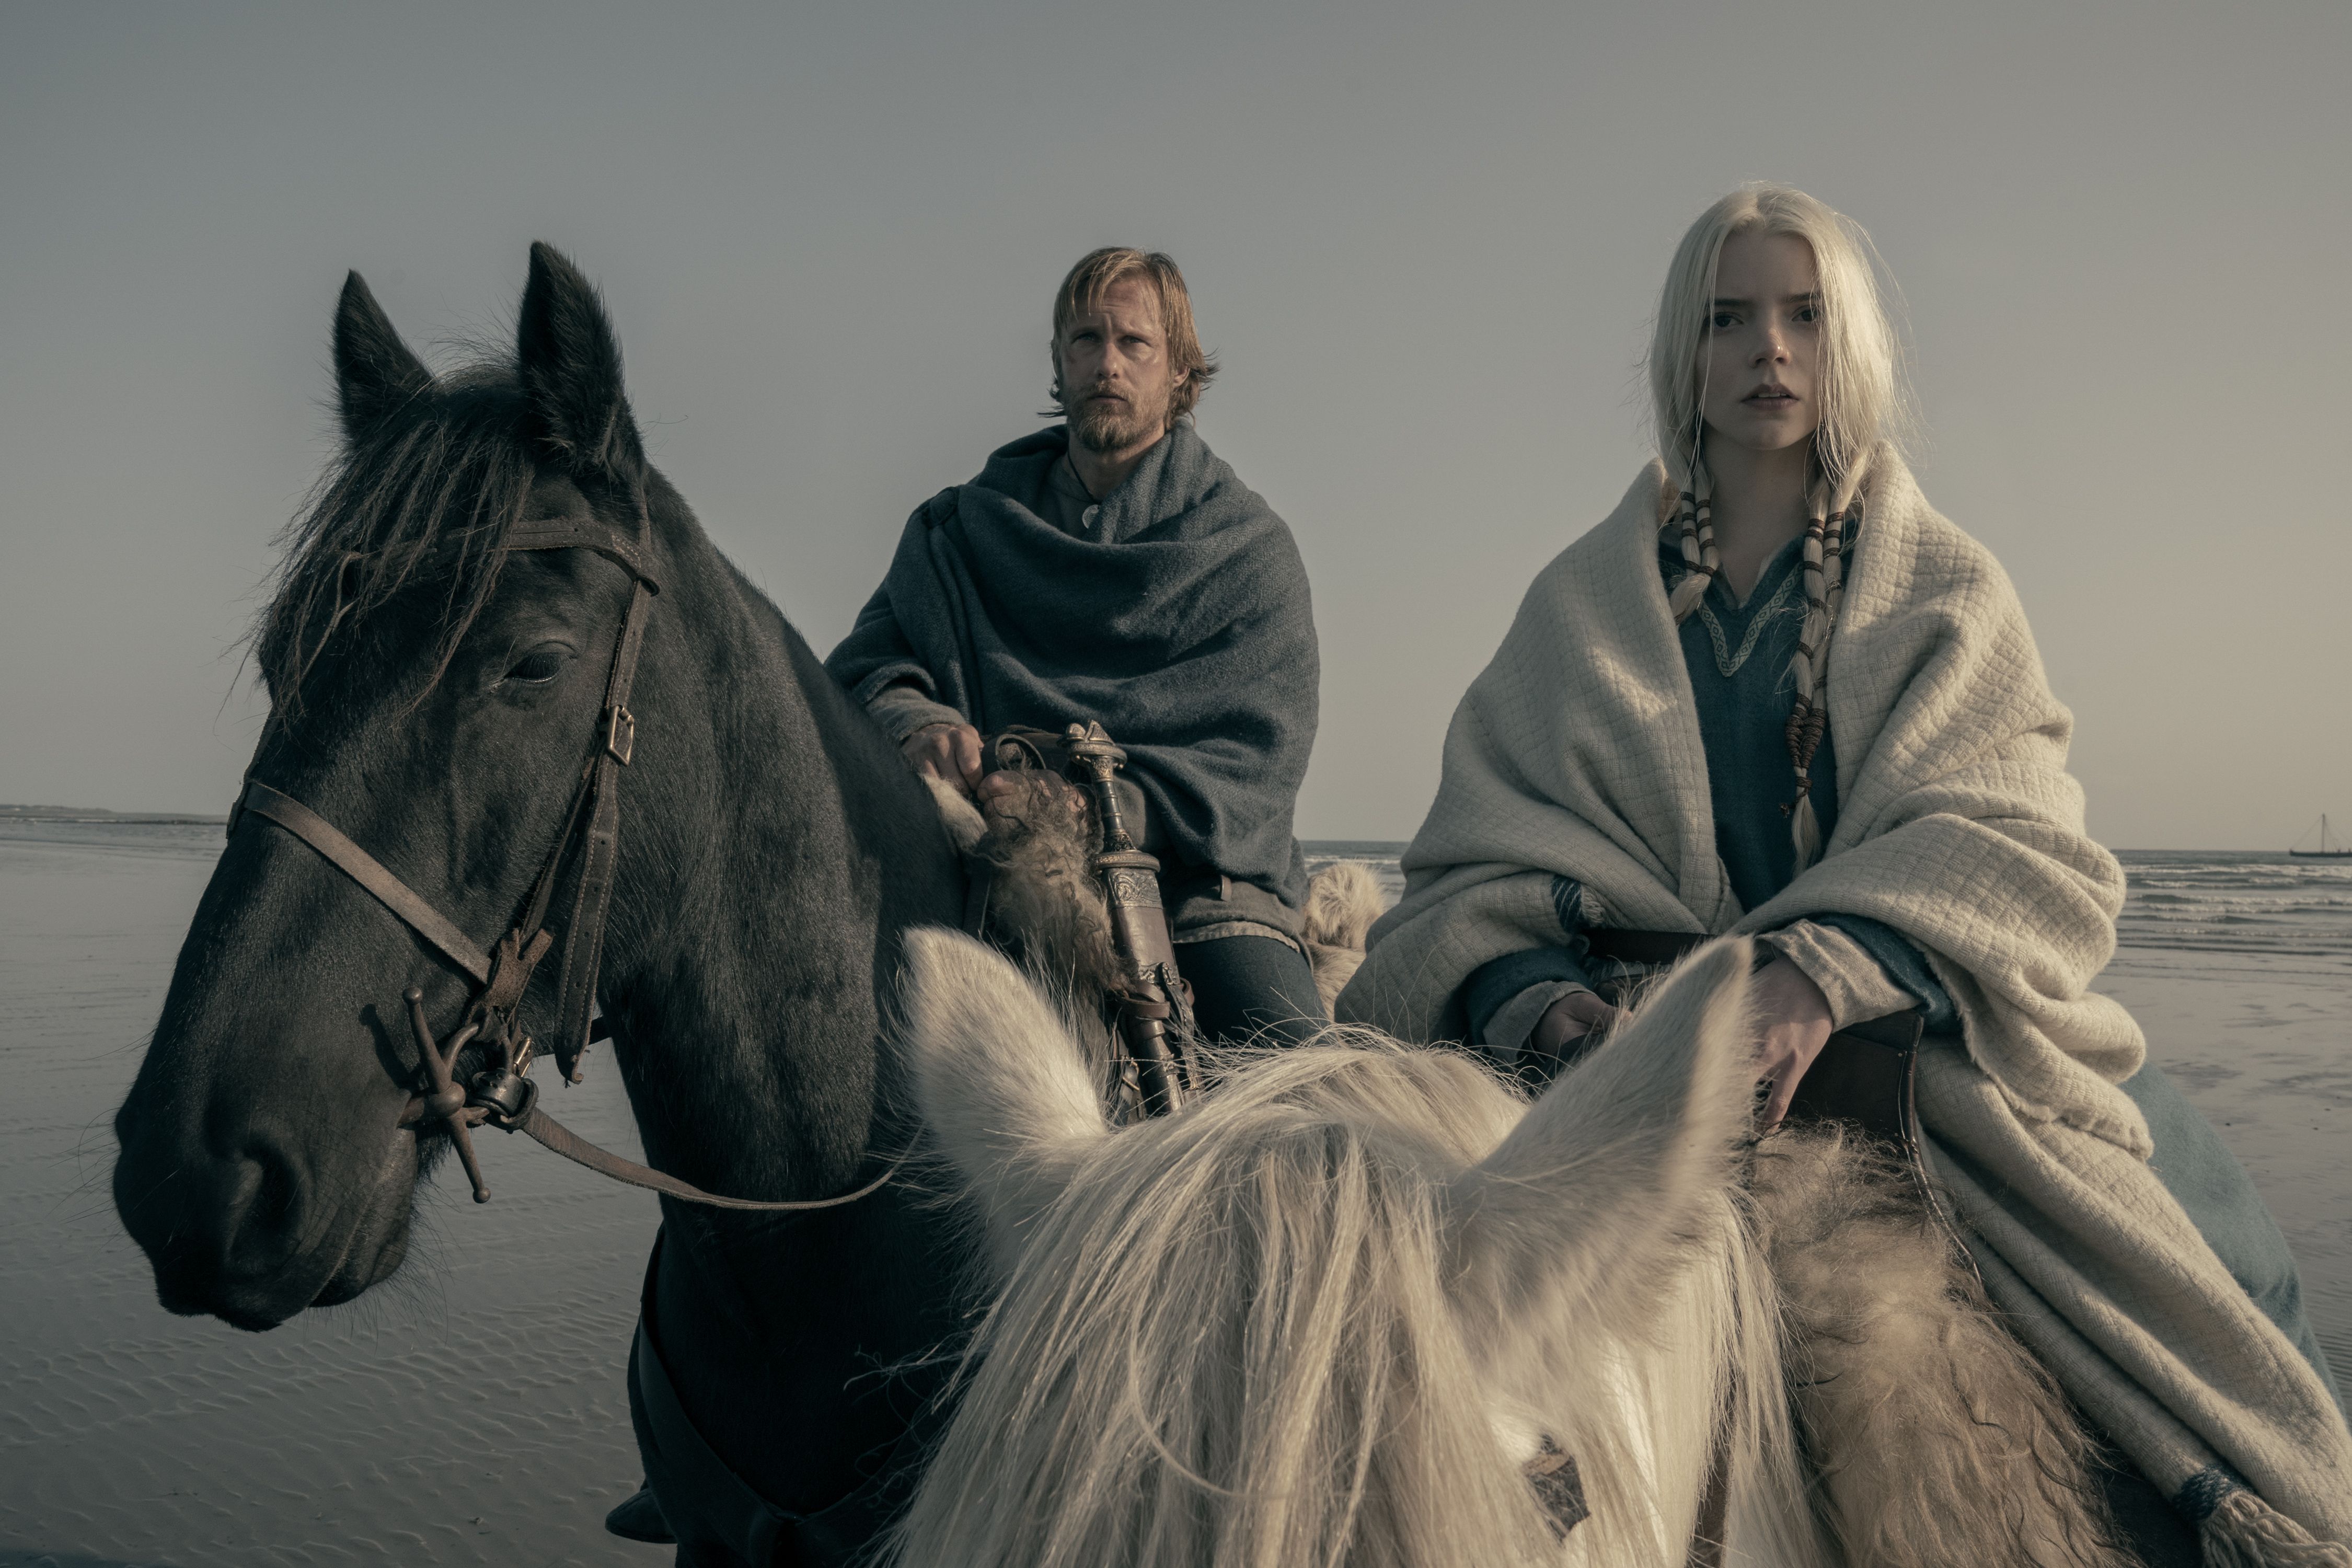 The Northman Image and Poster Show Alexander Skarsgård as Viking Prince